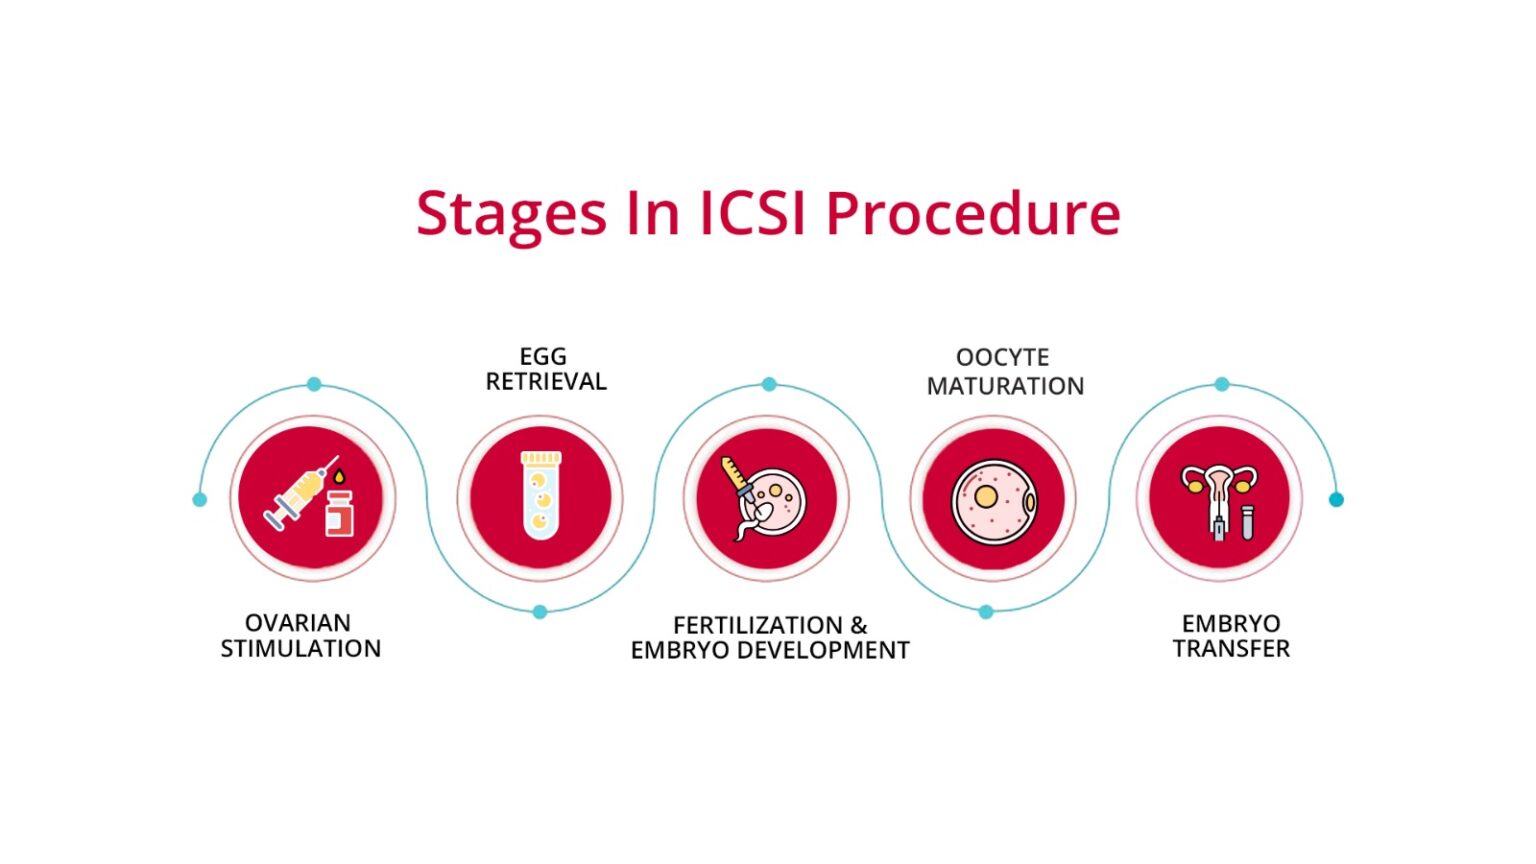 ICSI Procedure Stages